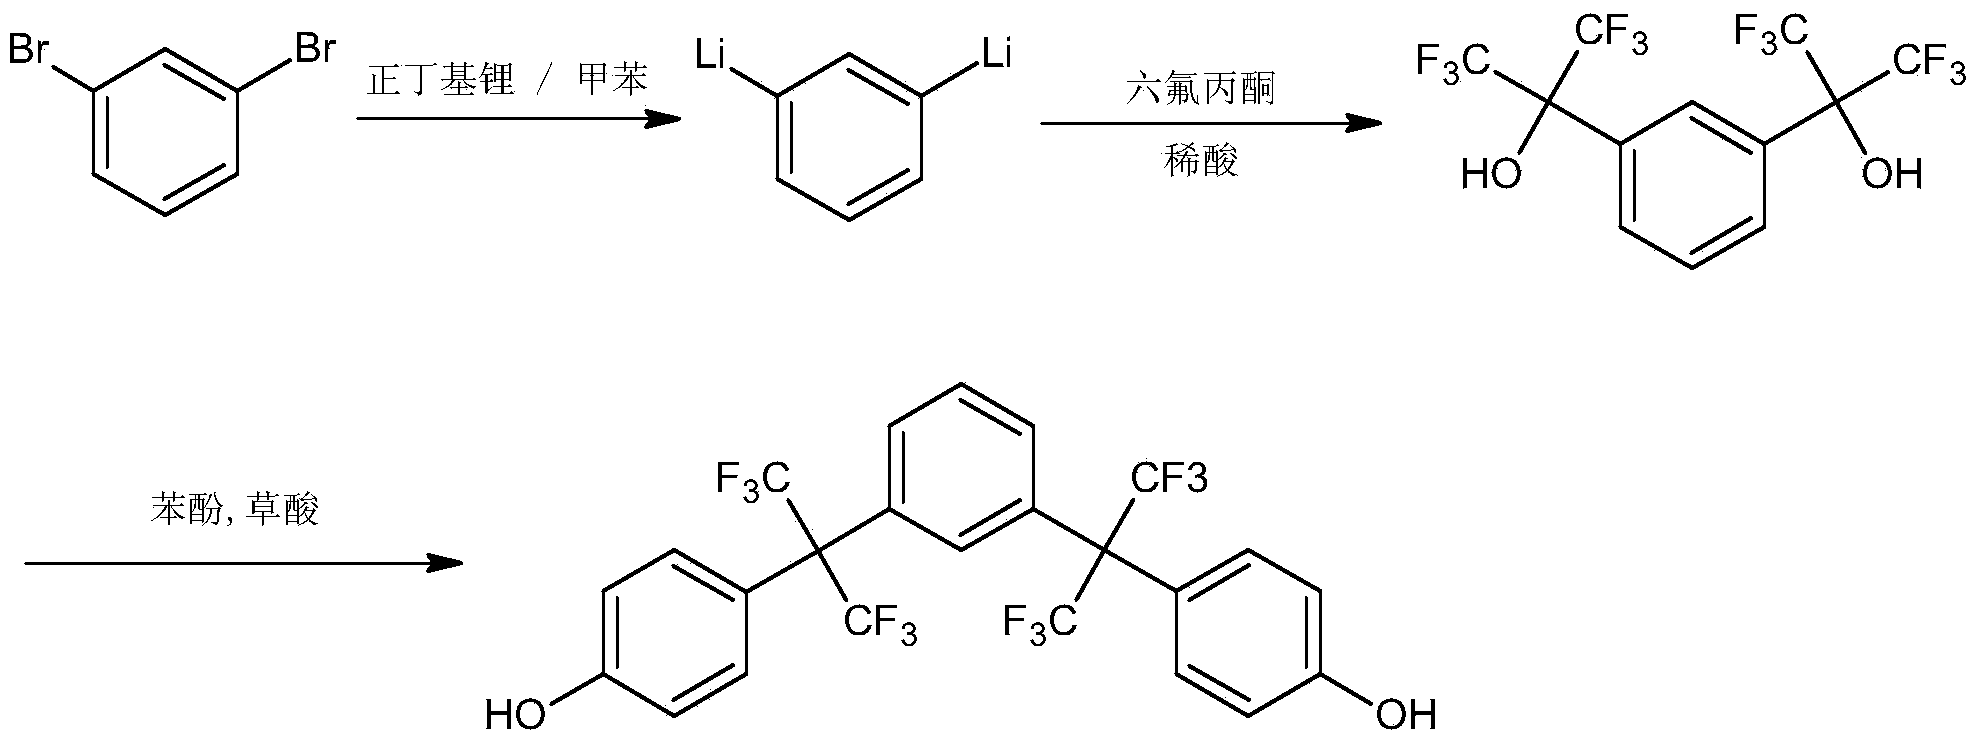 Preparation of novel fluorine-containing bisphenol compound